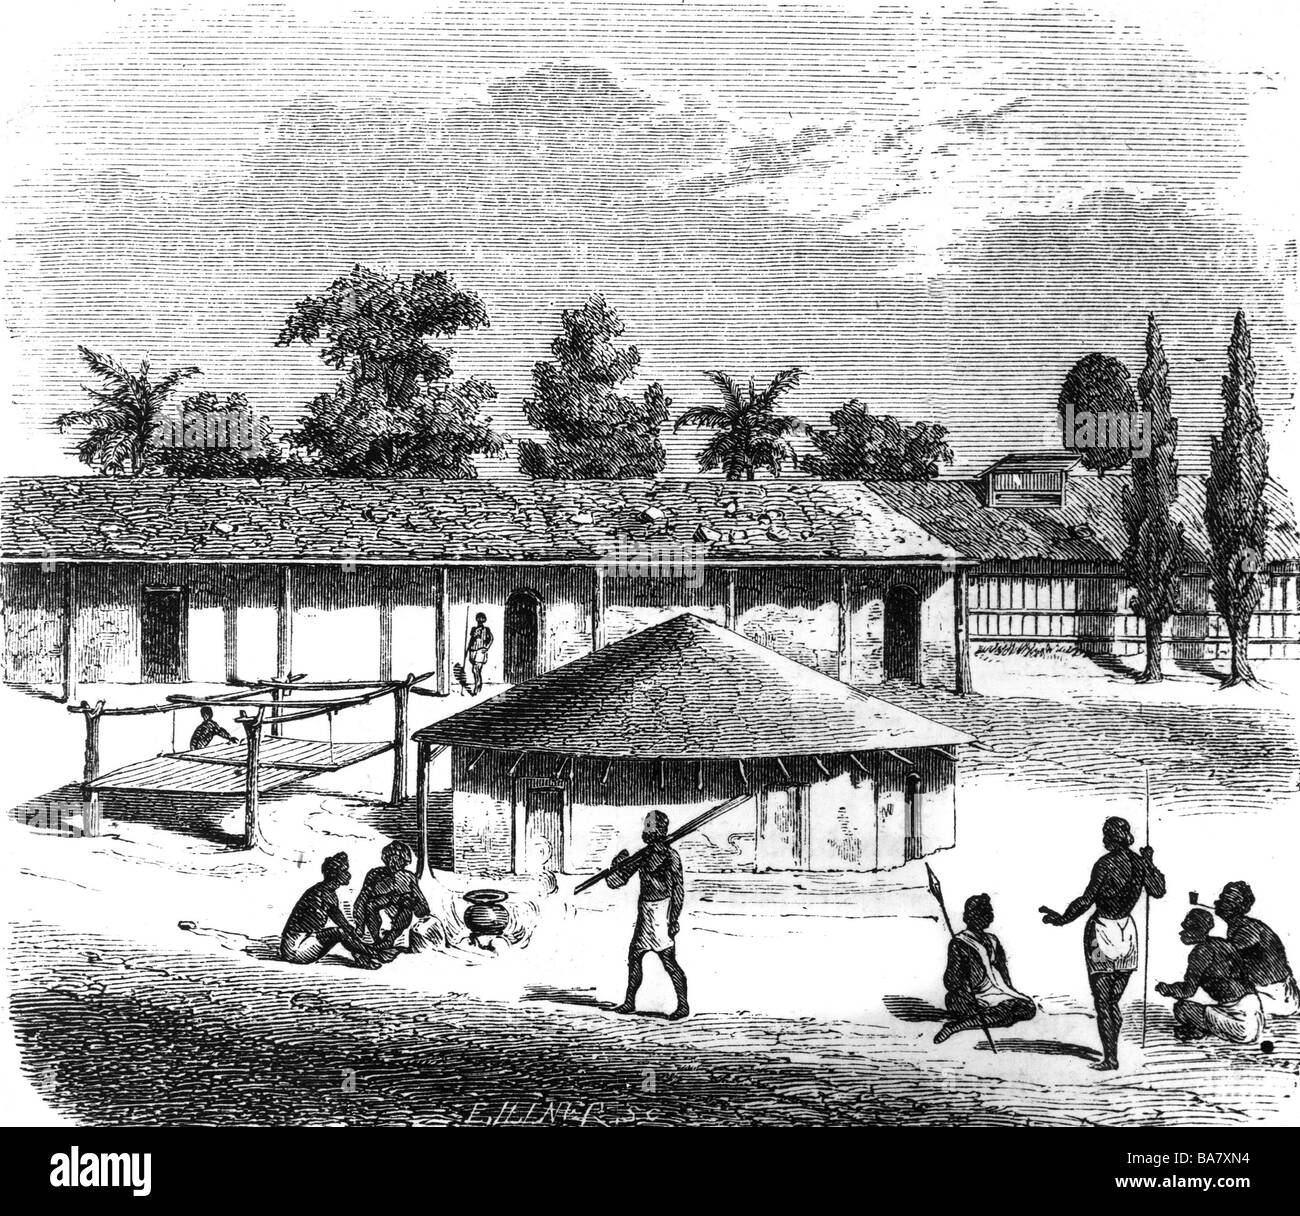 Burton, Richard Francis, 19.3.1821 - 20.10.1890, British explorer, view of Tembe, South Africa, wood engraving, 19th century, Stock Photo